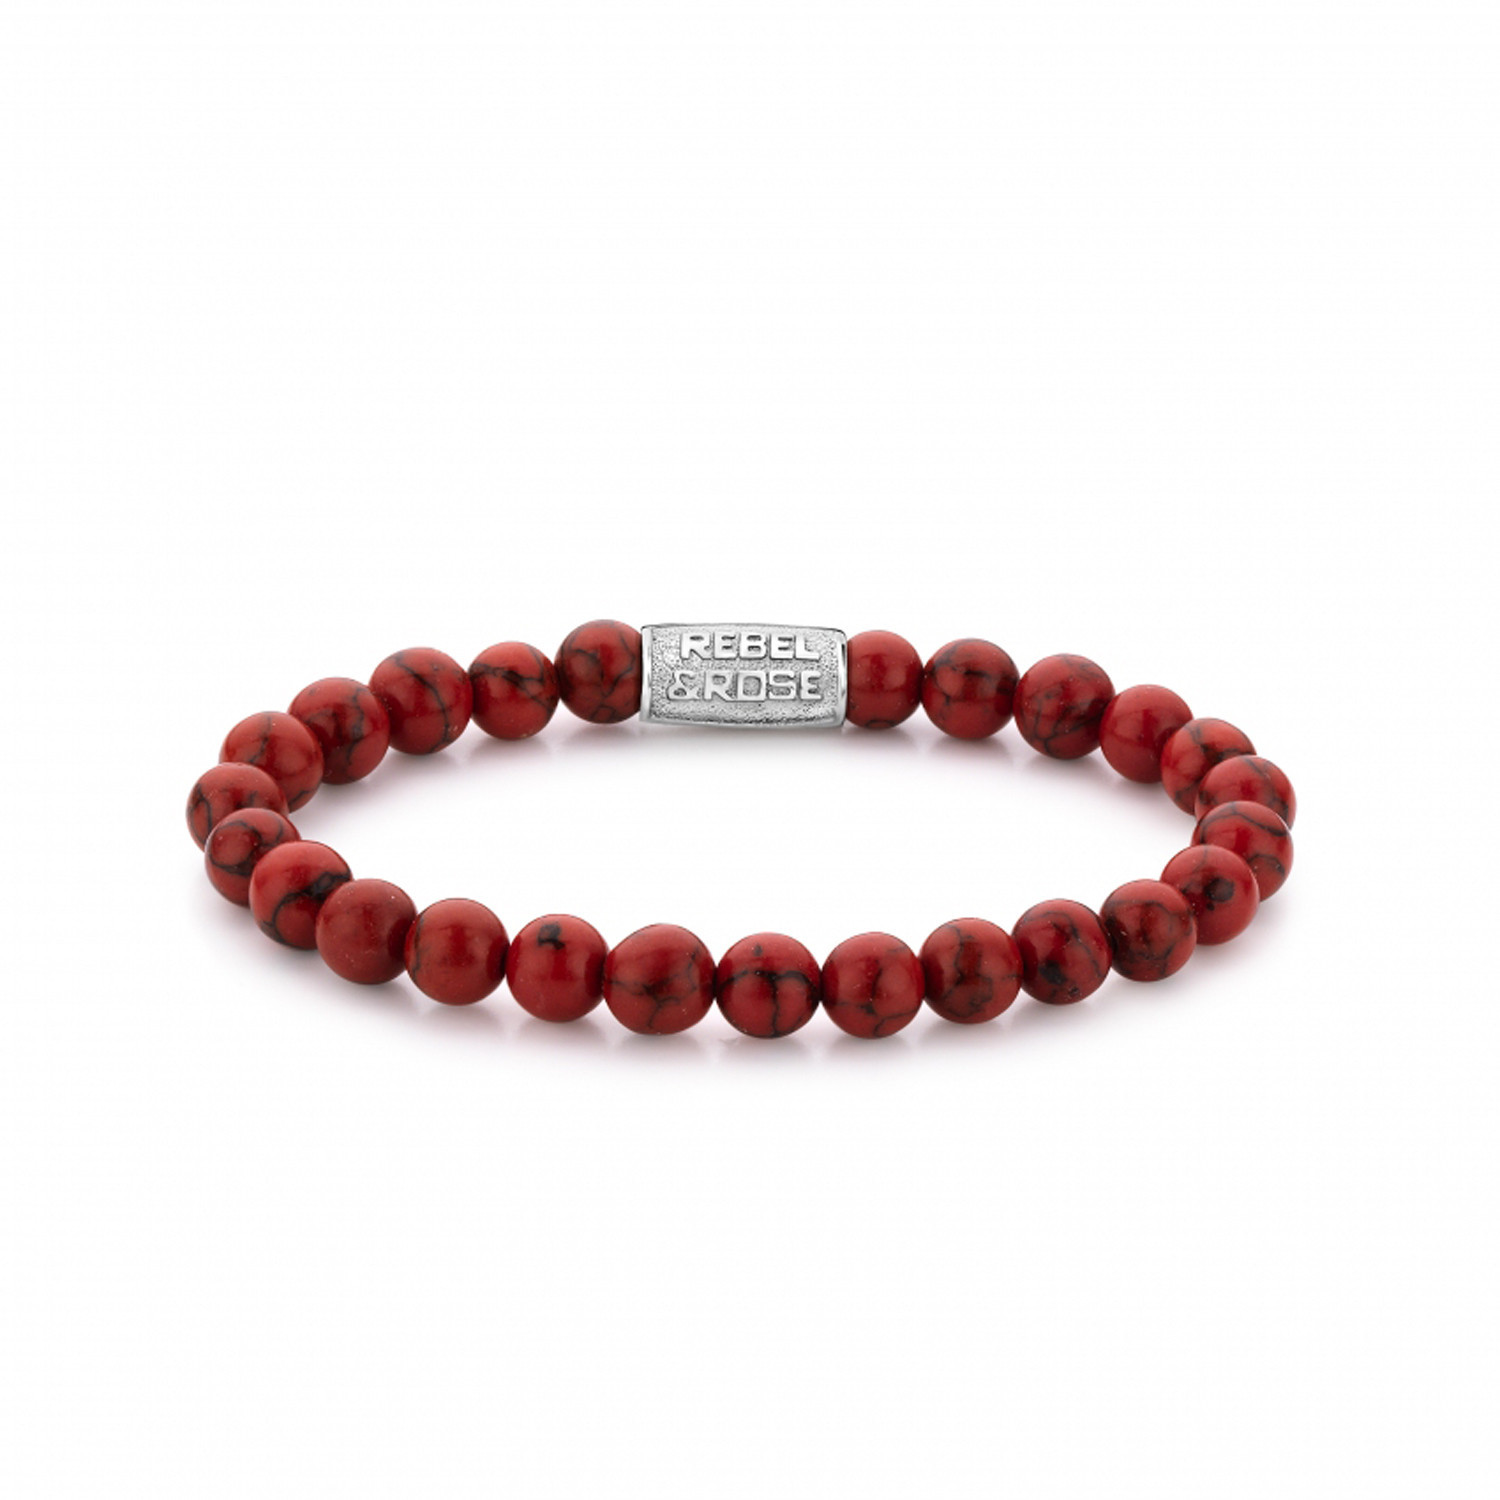 Bracelet homme Rebel et Rose stones only
perles turquoise rouge 8mm